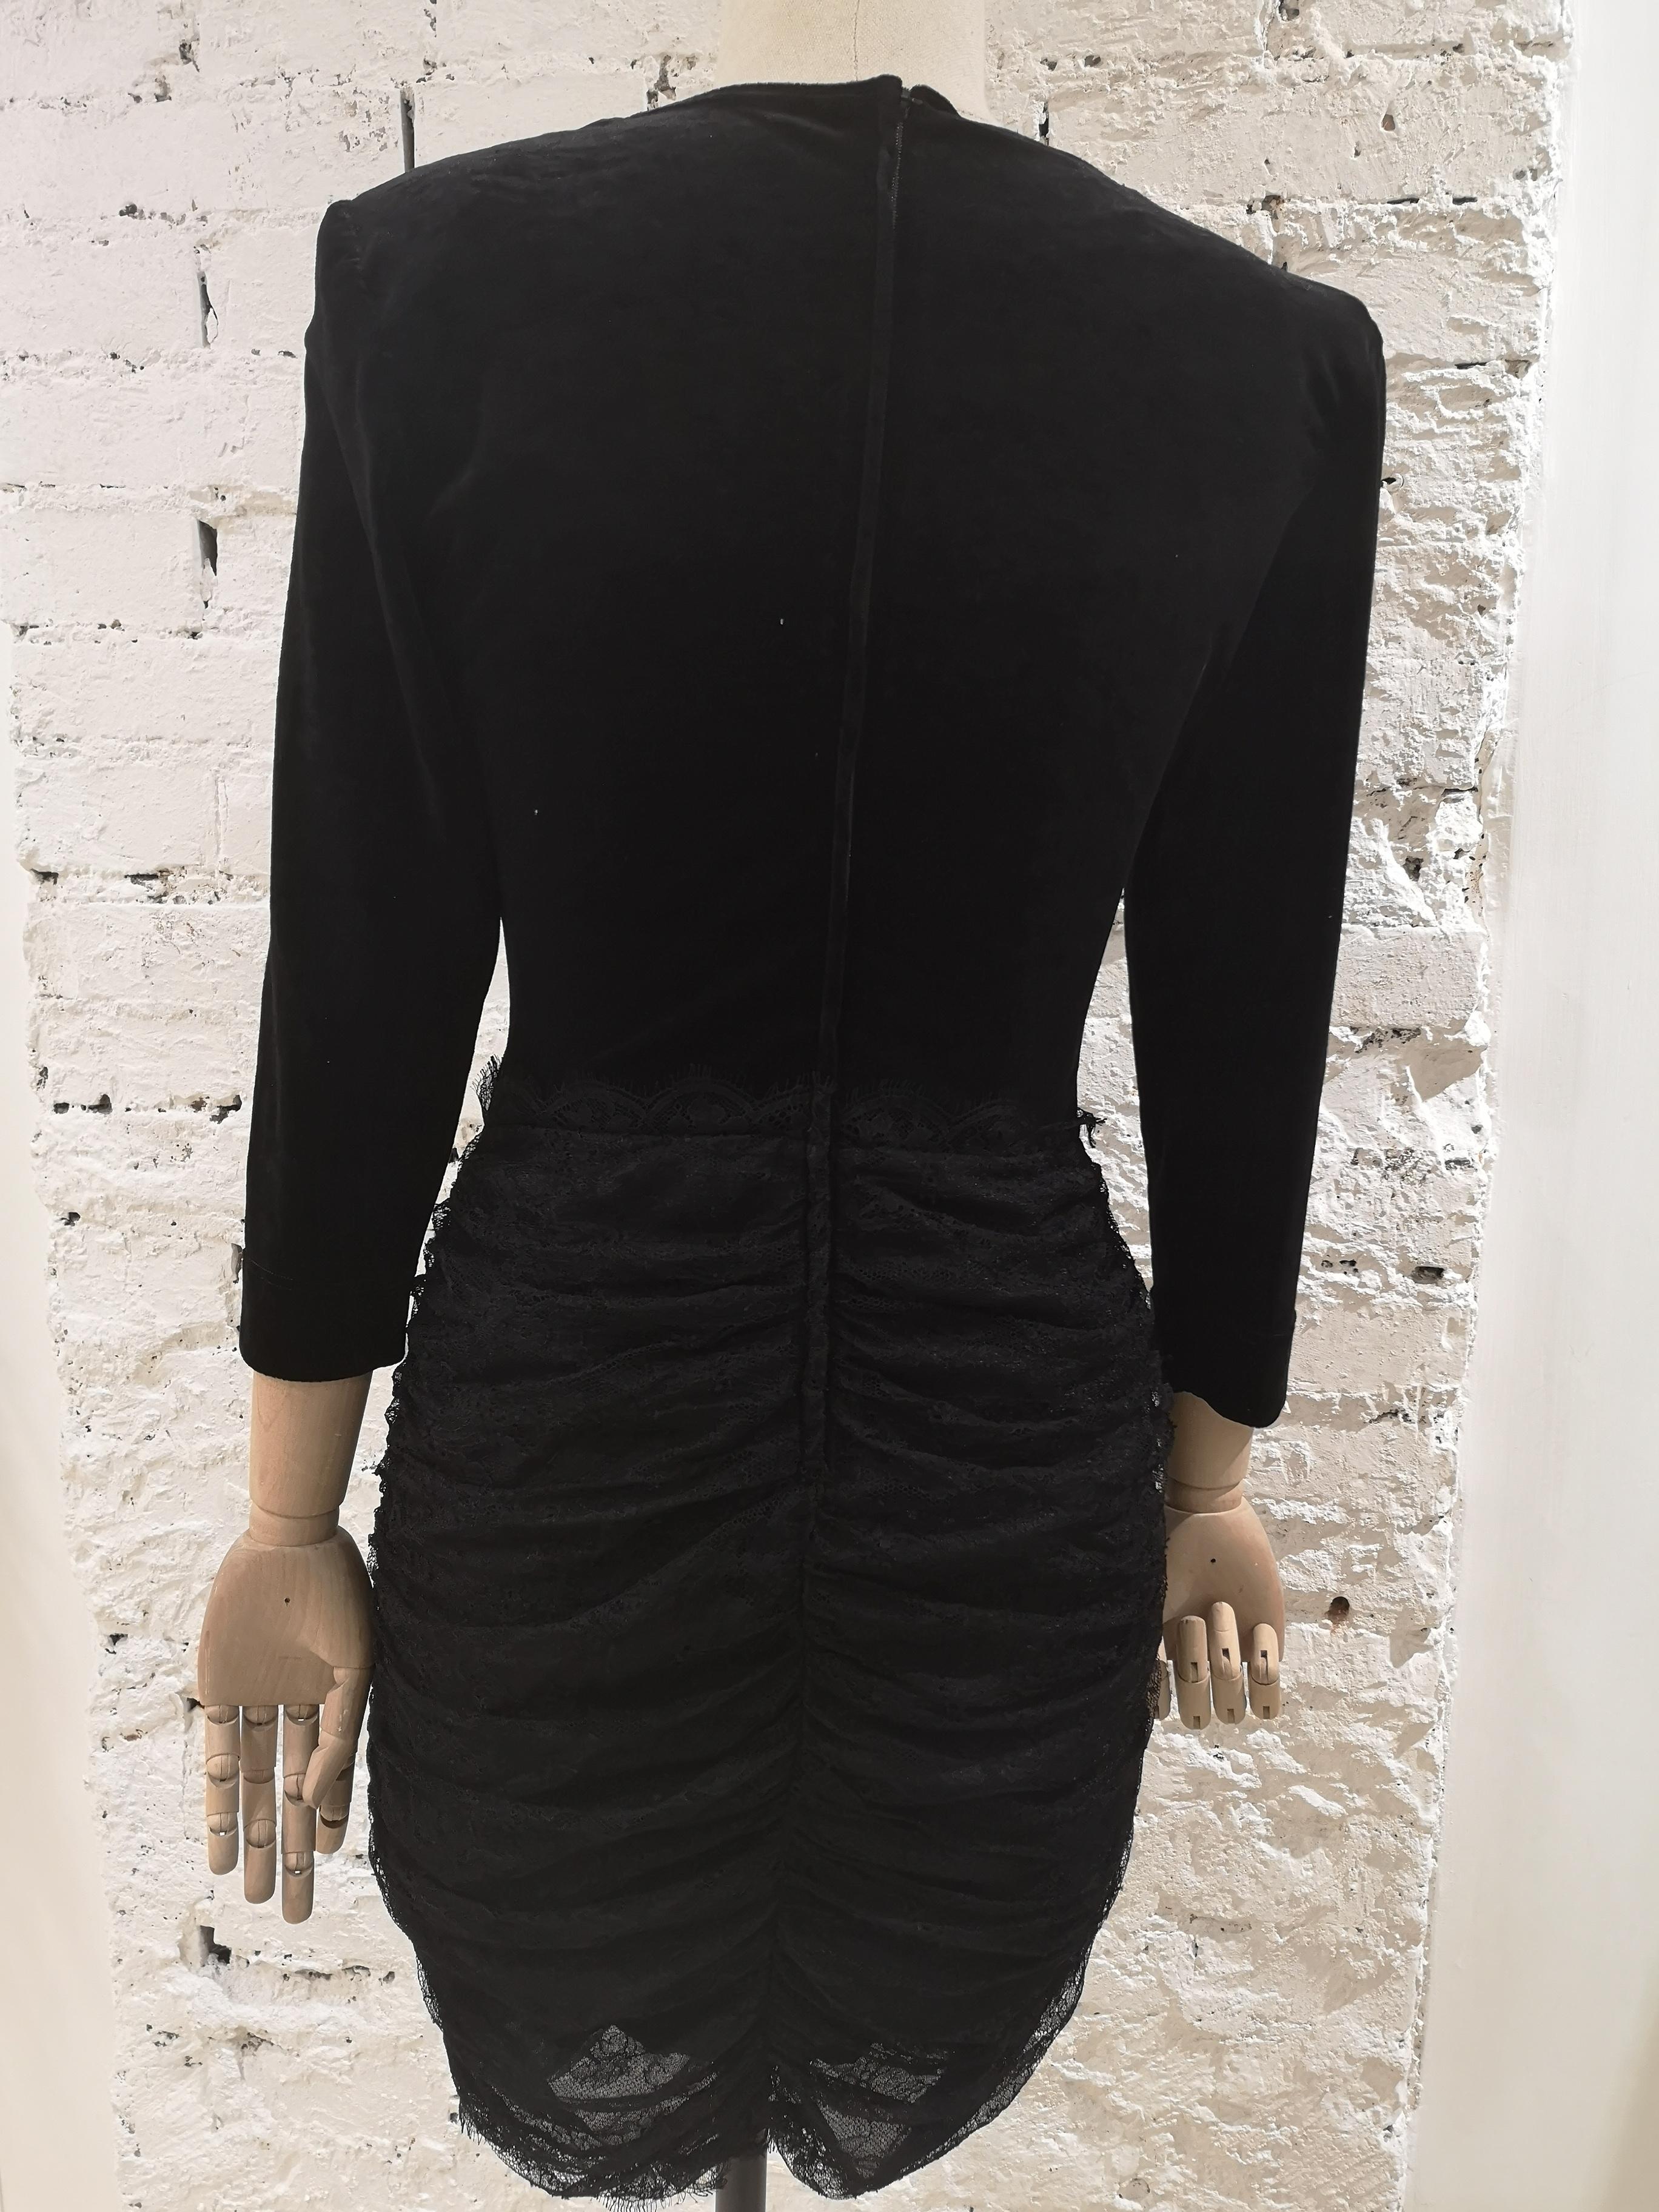 Moschino black velvet dress In Good Condition For Sale In Capri, IT